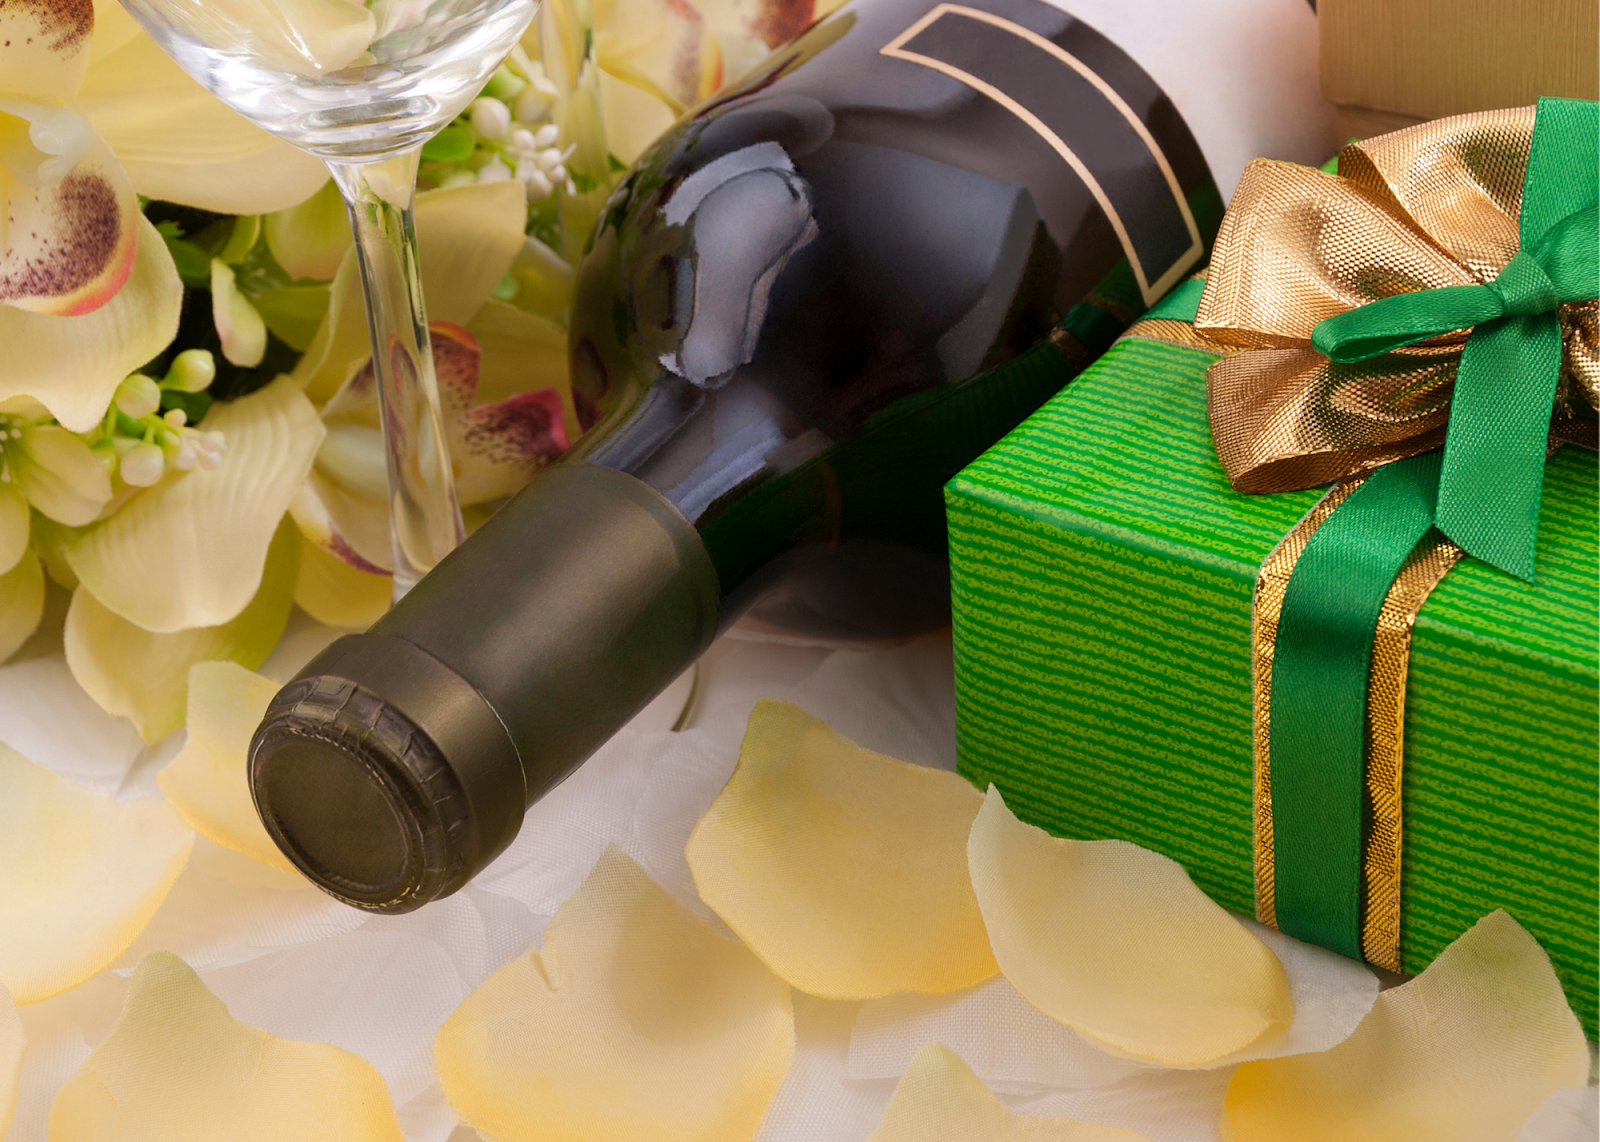 bottle of wine beside a green gift box